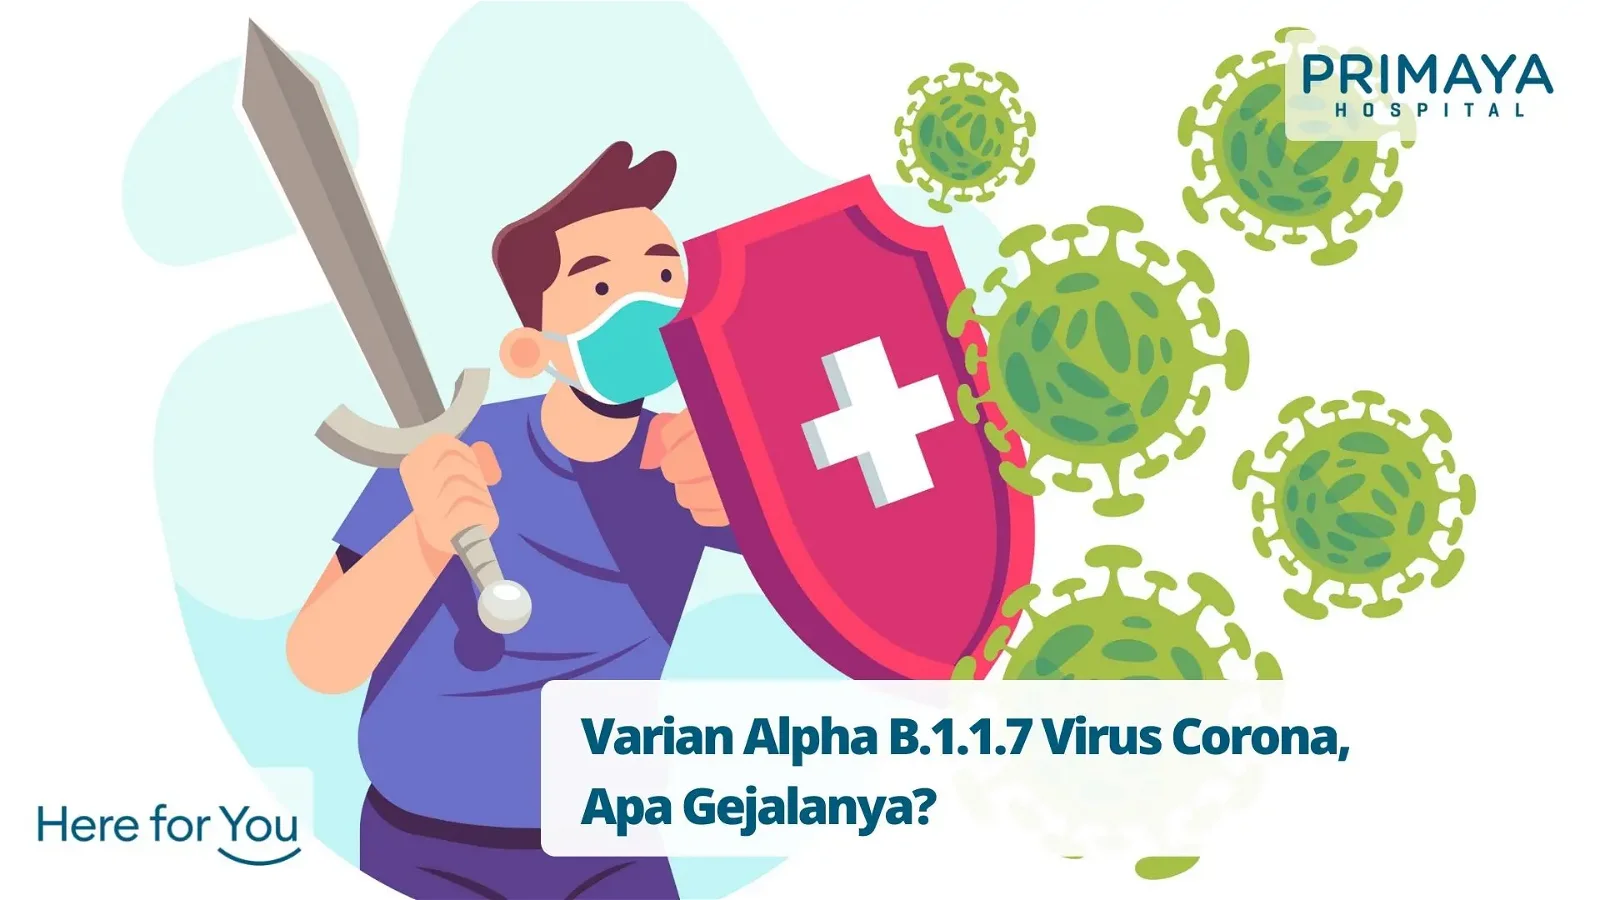 Varian Alpha B.1.1.7 Virus Corona, Apa Gejalanya